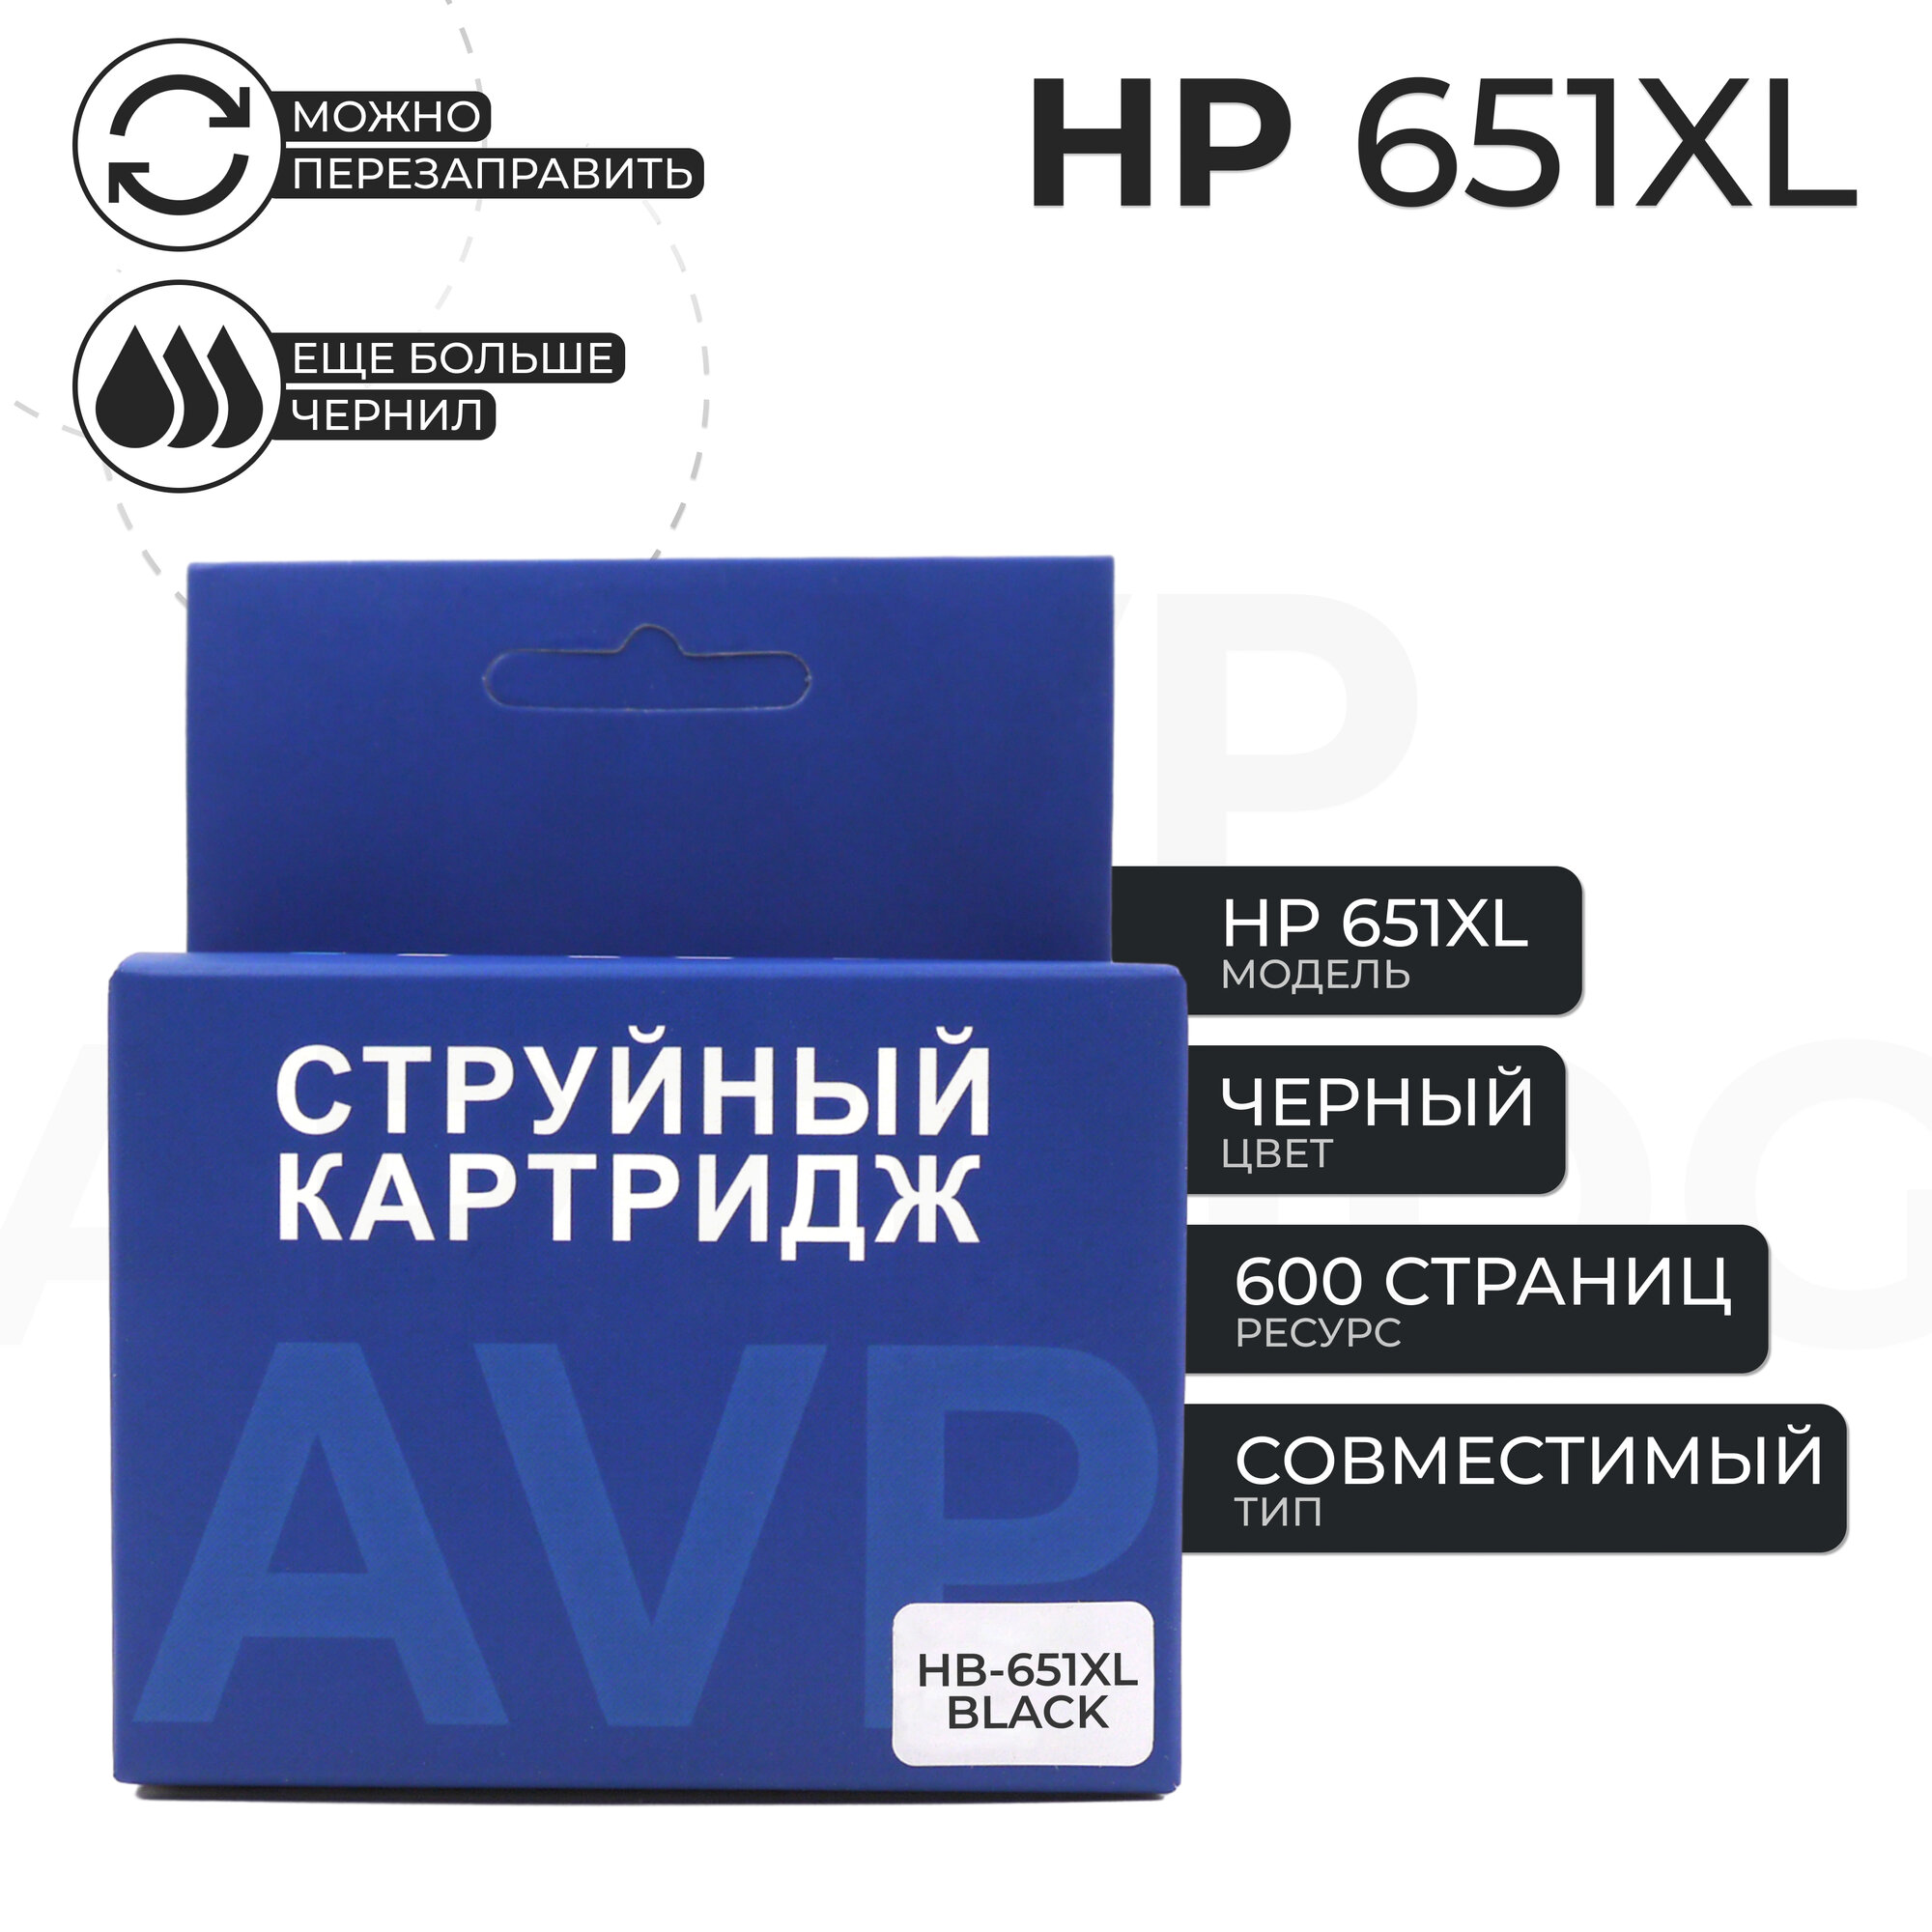 Картридж HP 651 XL (651XL), черный